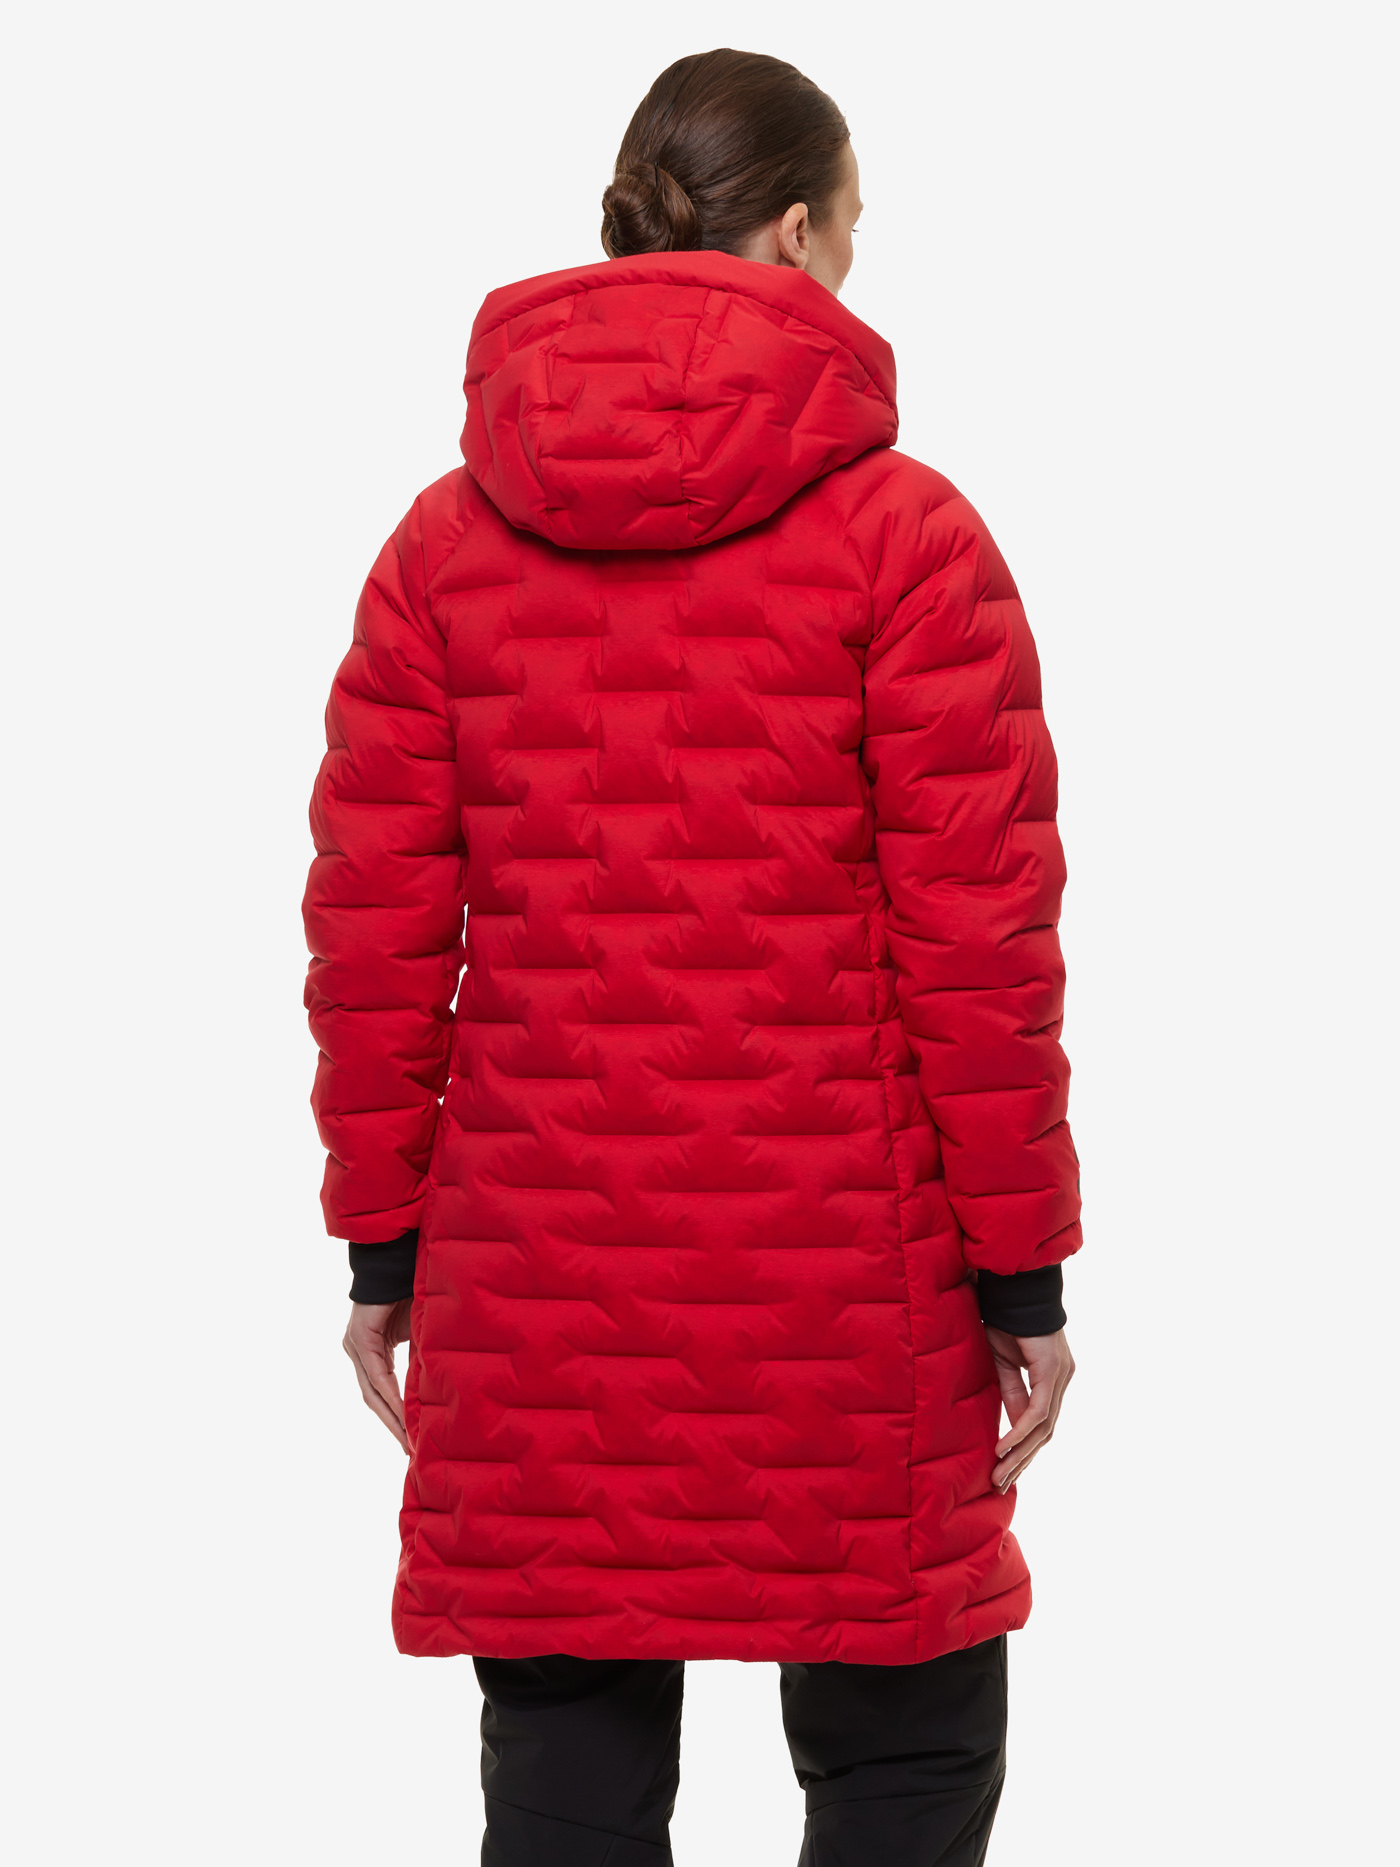 Куртка BASK, размер 52, цвет красный 22210-9205-052 Brenta - фото 2